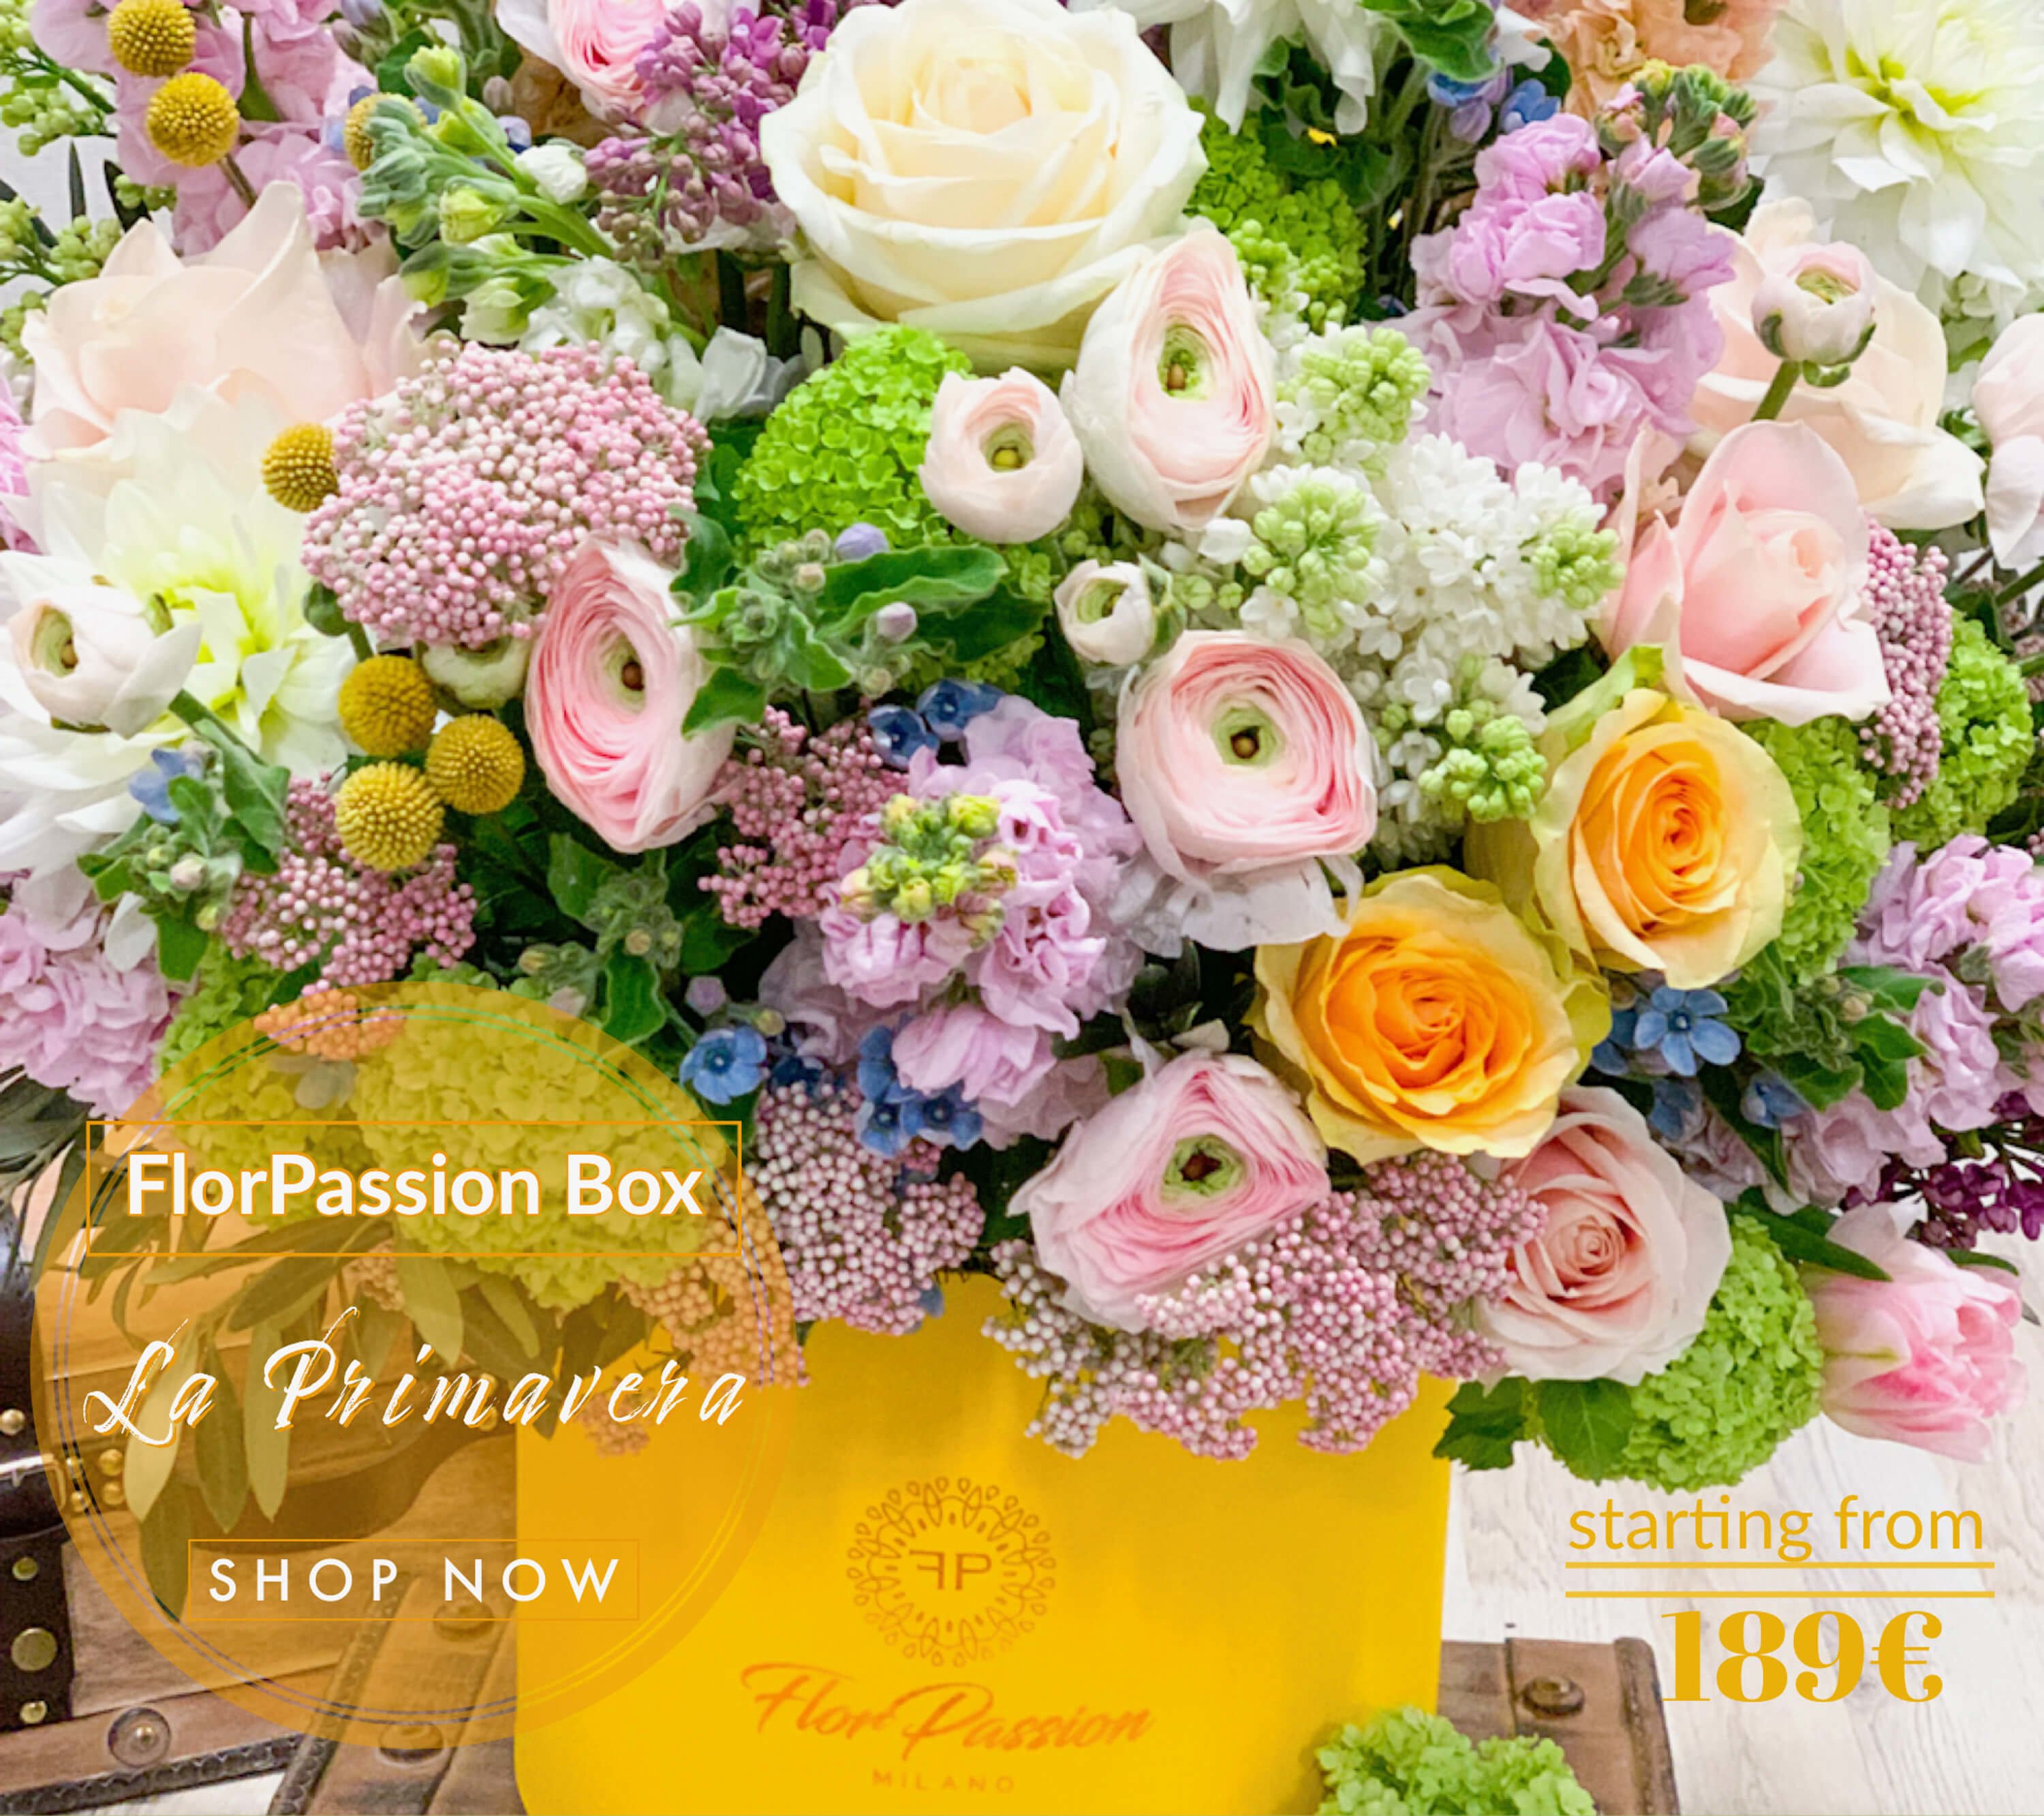 La Primavera Luxury Flower Box FlorPassion Milan